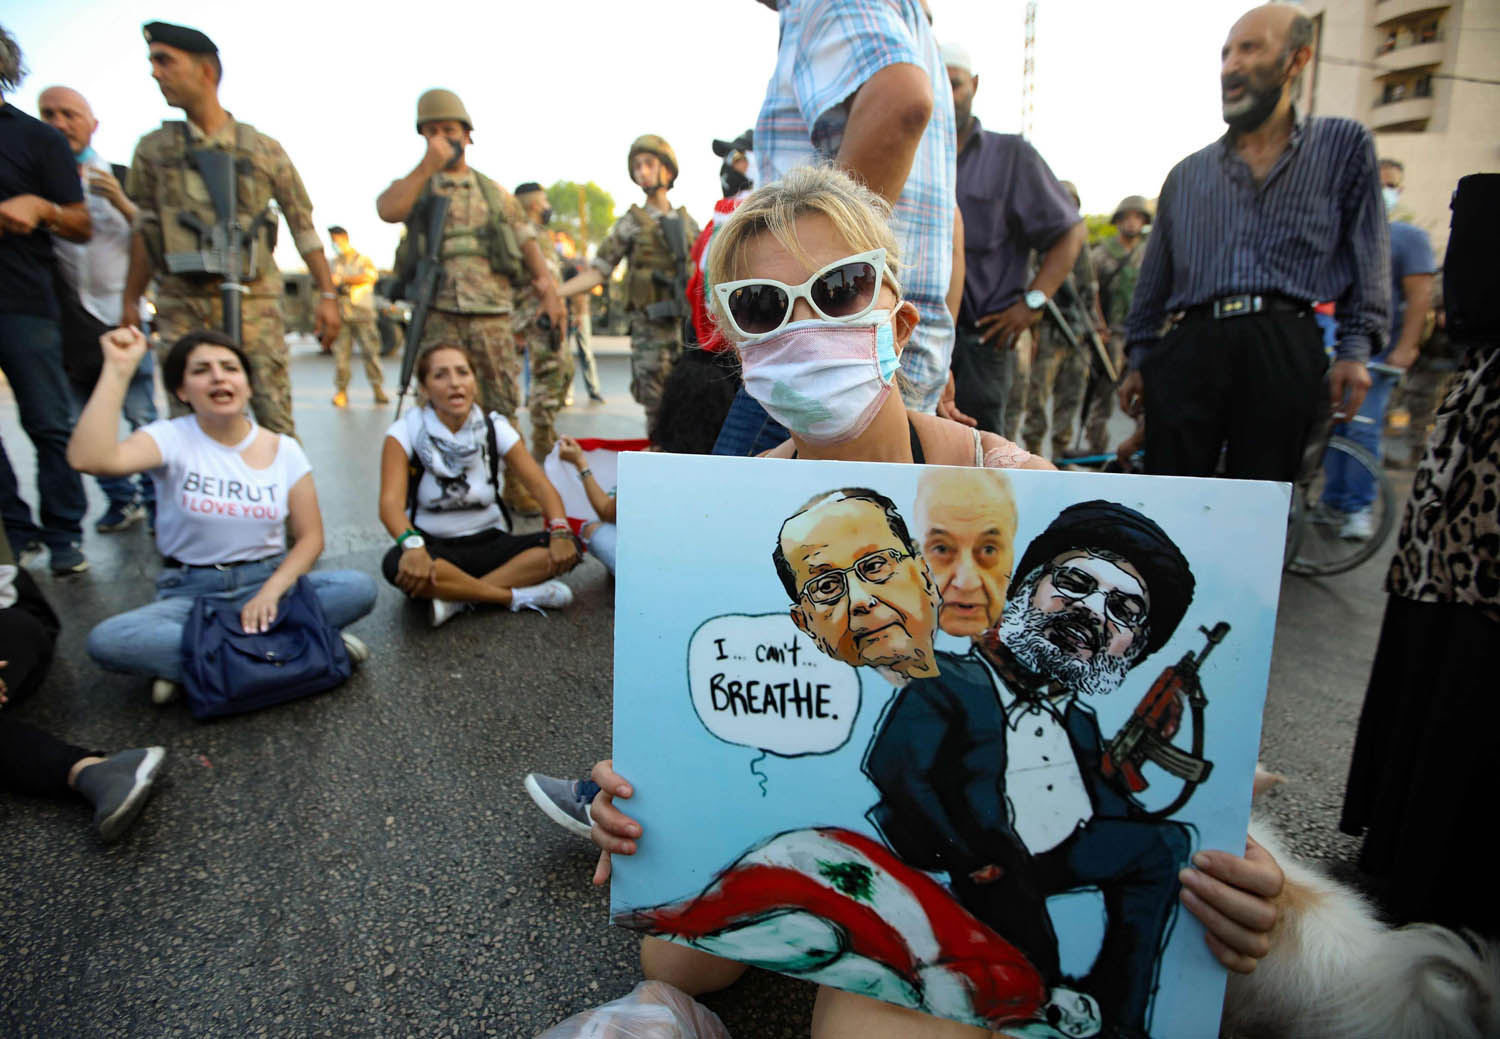 متظاهرون لبنانيون في بيروت يرفعون صورا تندد بالثنائي الشيعي والرئيس عون